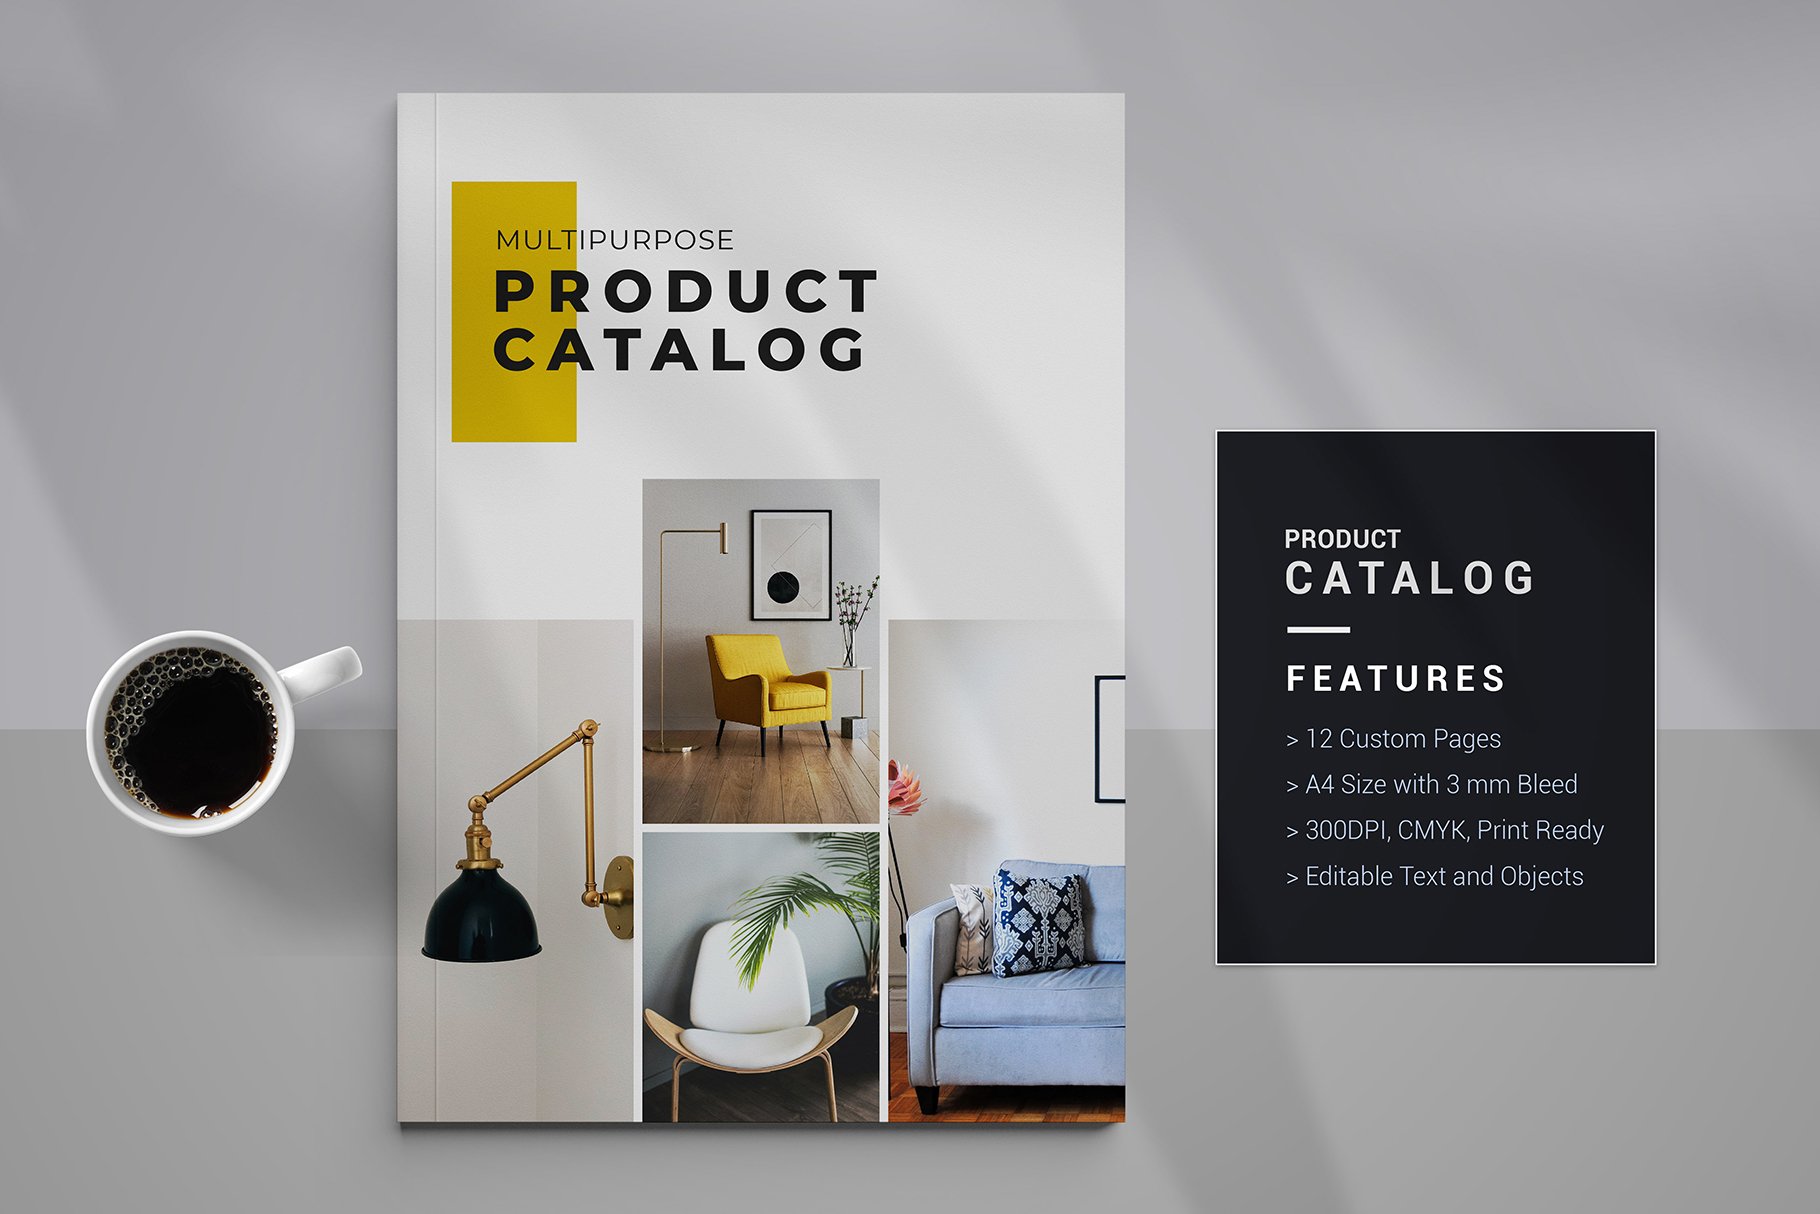 Multipurpose Product Catalog Design preview image.